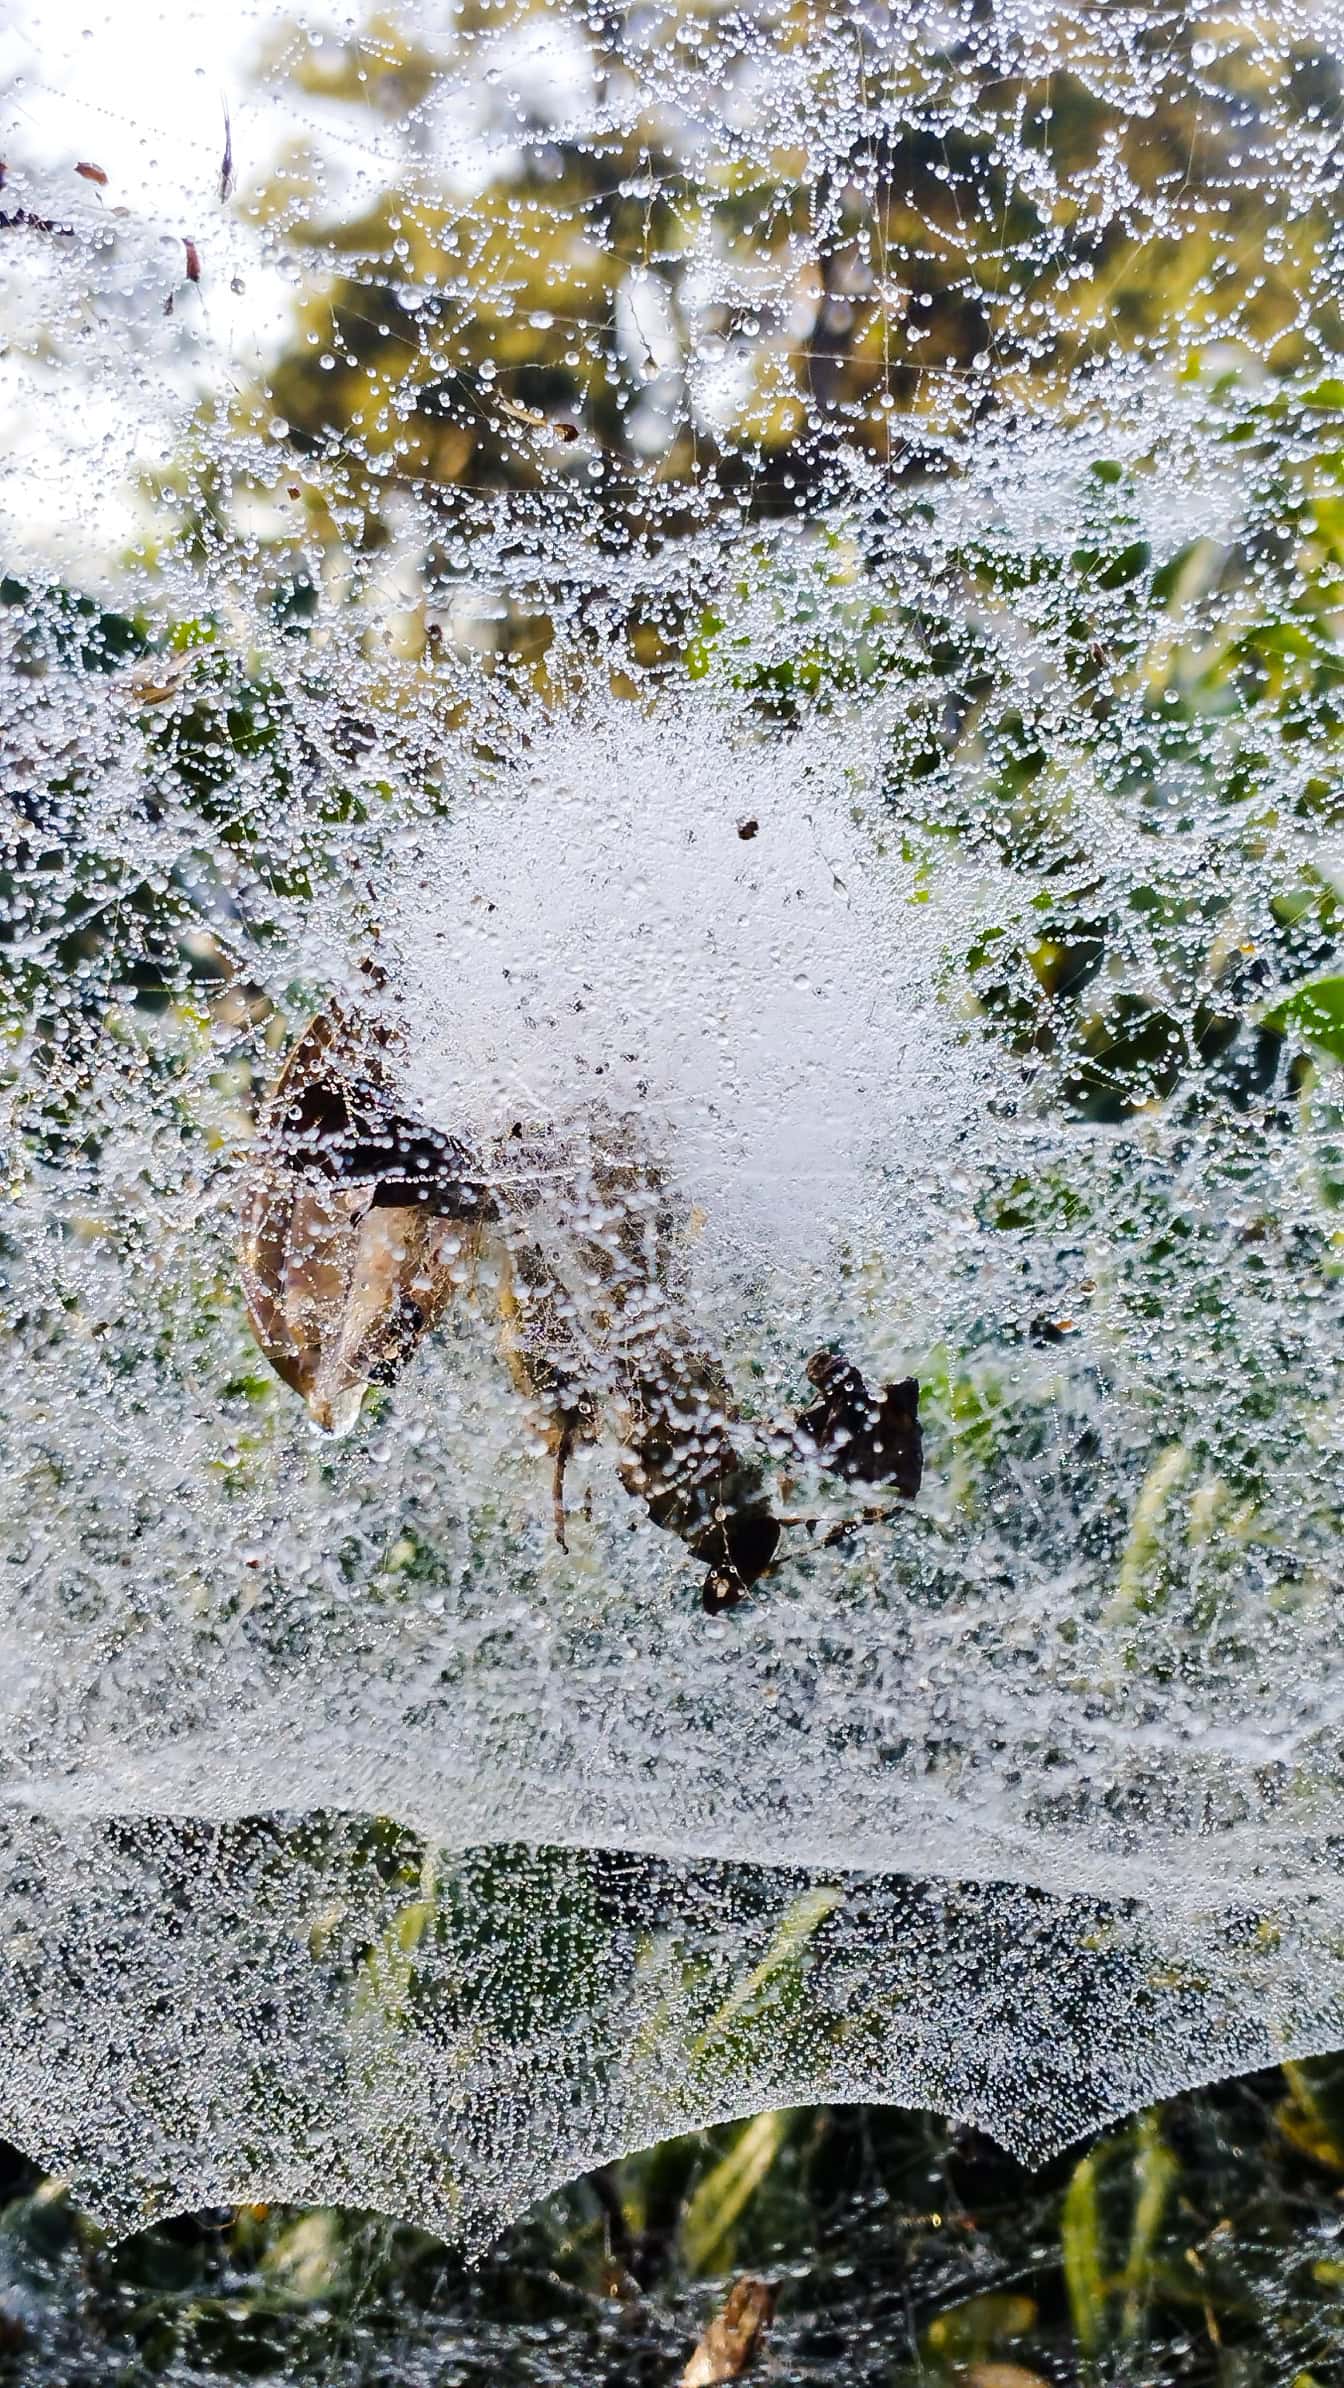 Tampilan close-up jaring laba-laba dengan tetesan air kecil